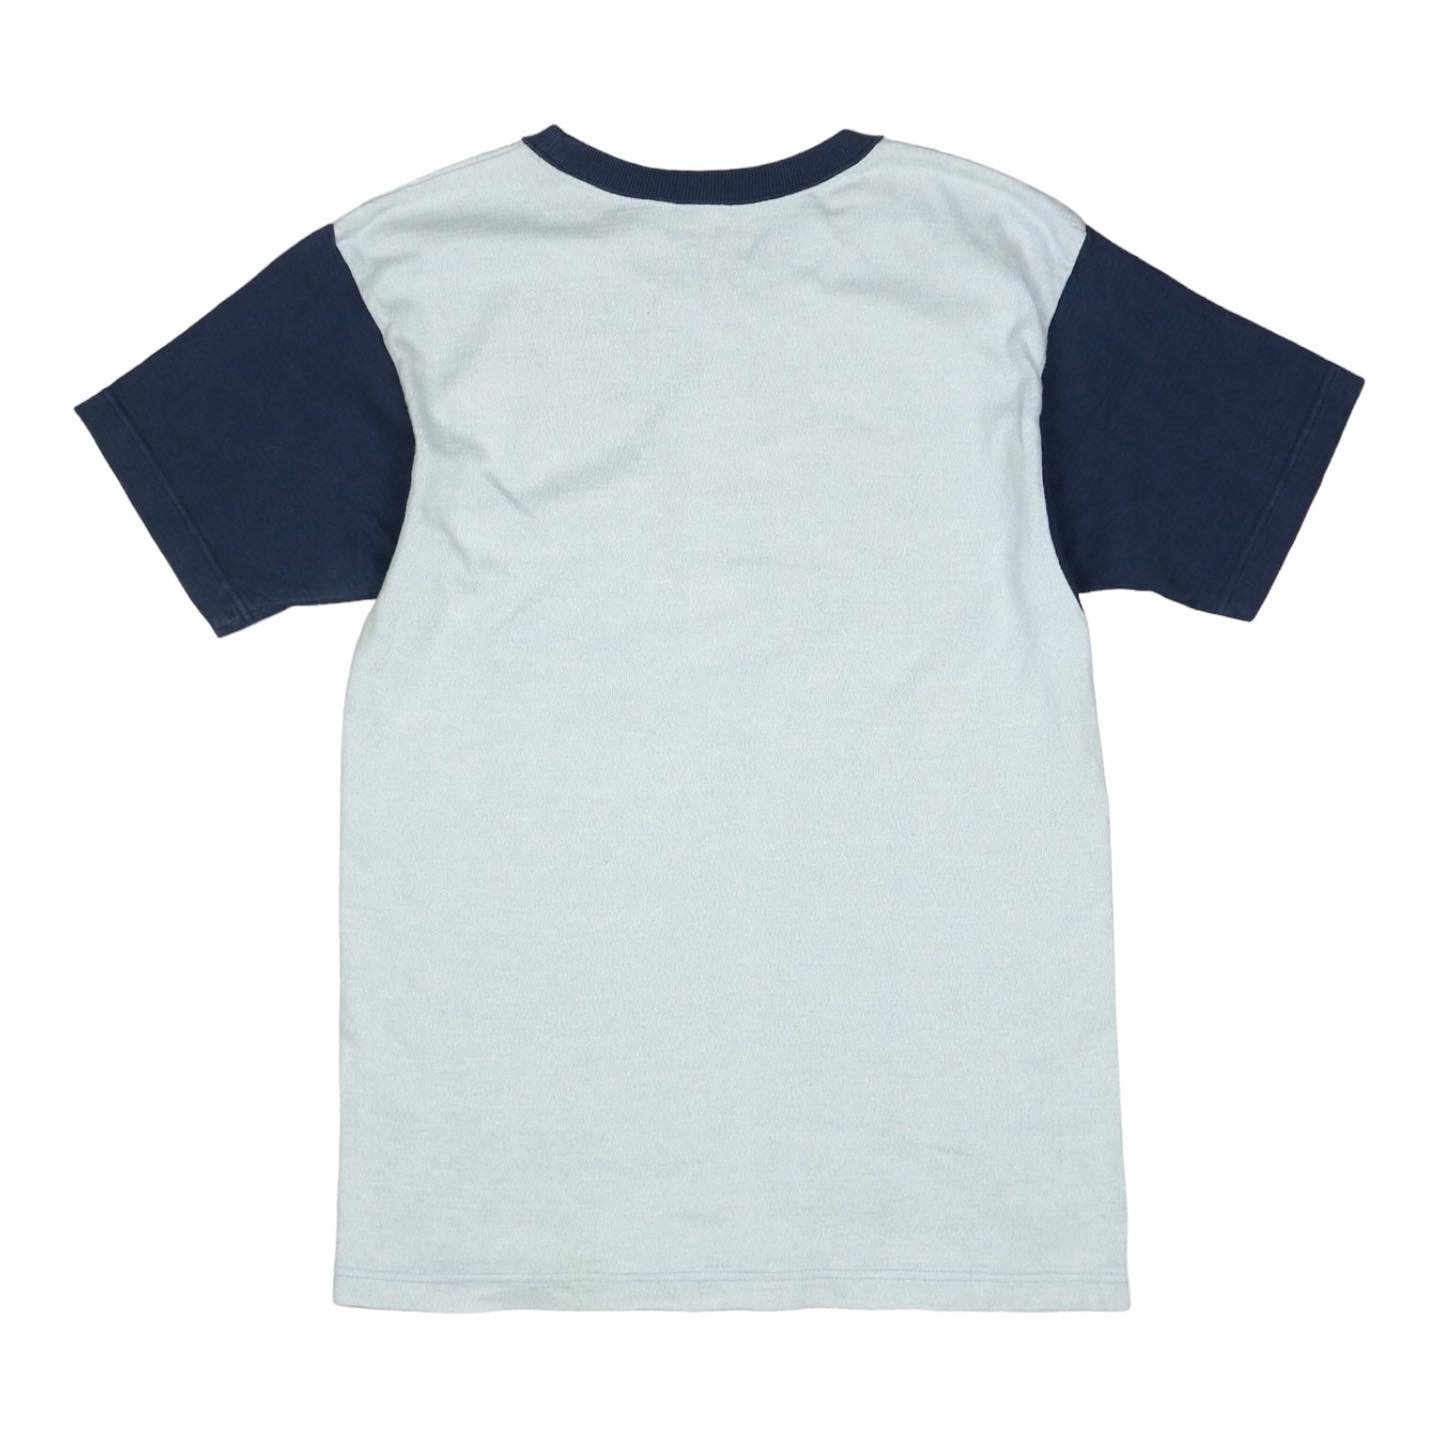 CAB Pocket T-Shirt Size M